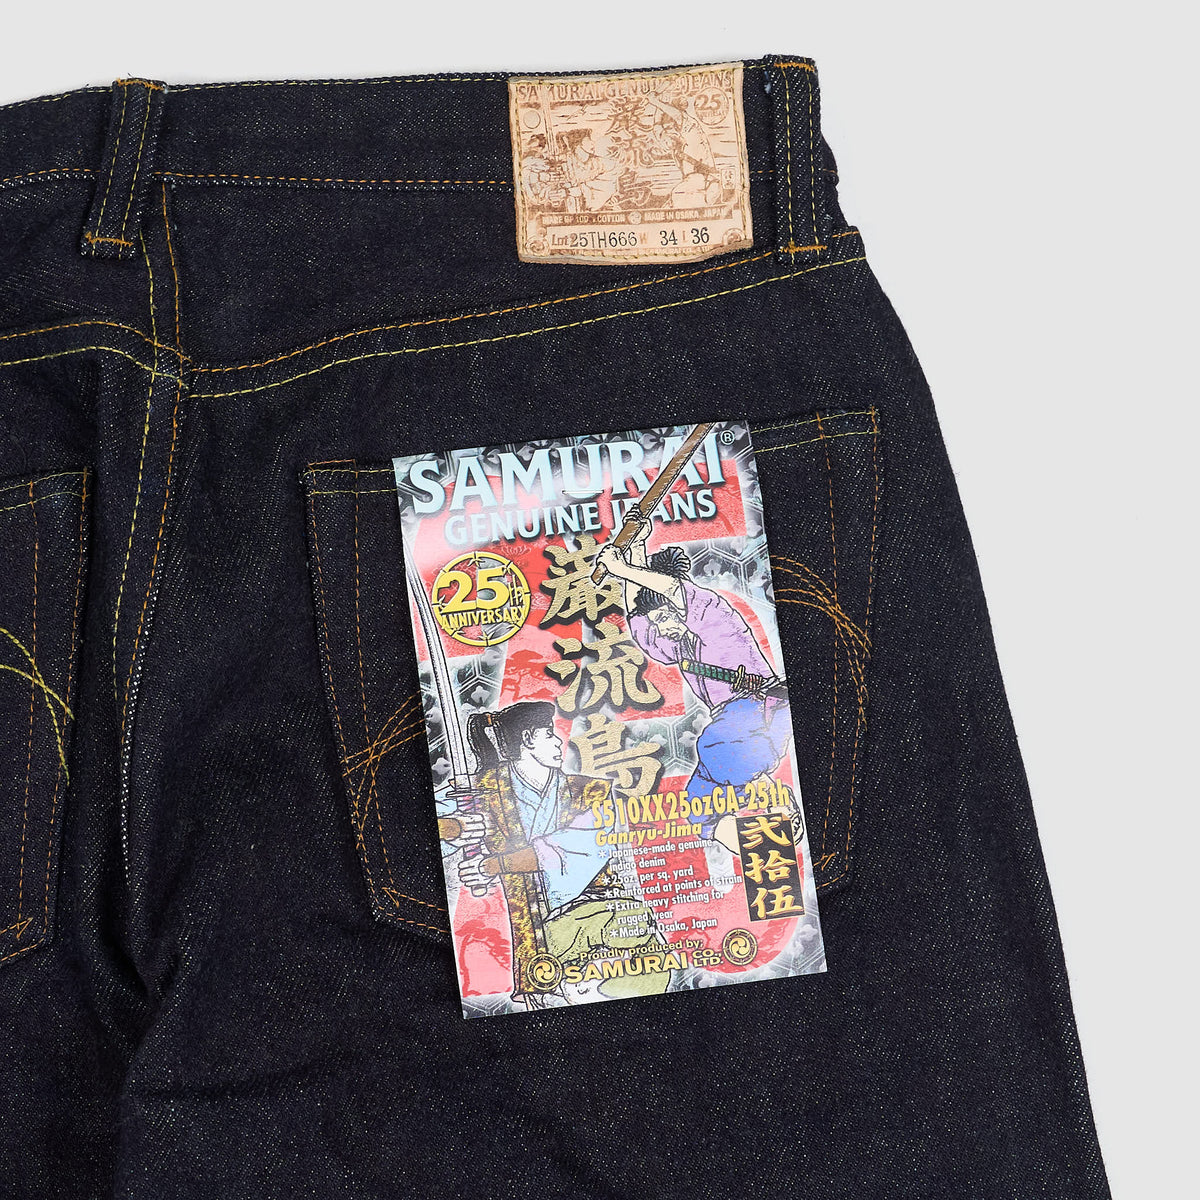 Samurai 5-Pocket 25th. Anniversary Five Pocket Selvage Jeans 25oz.